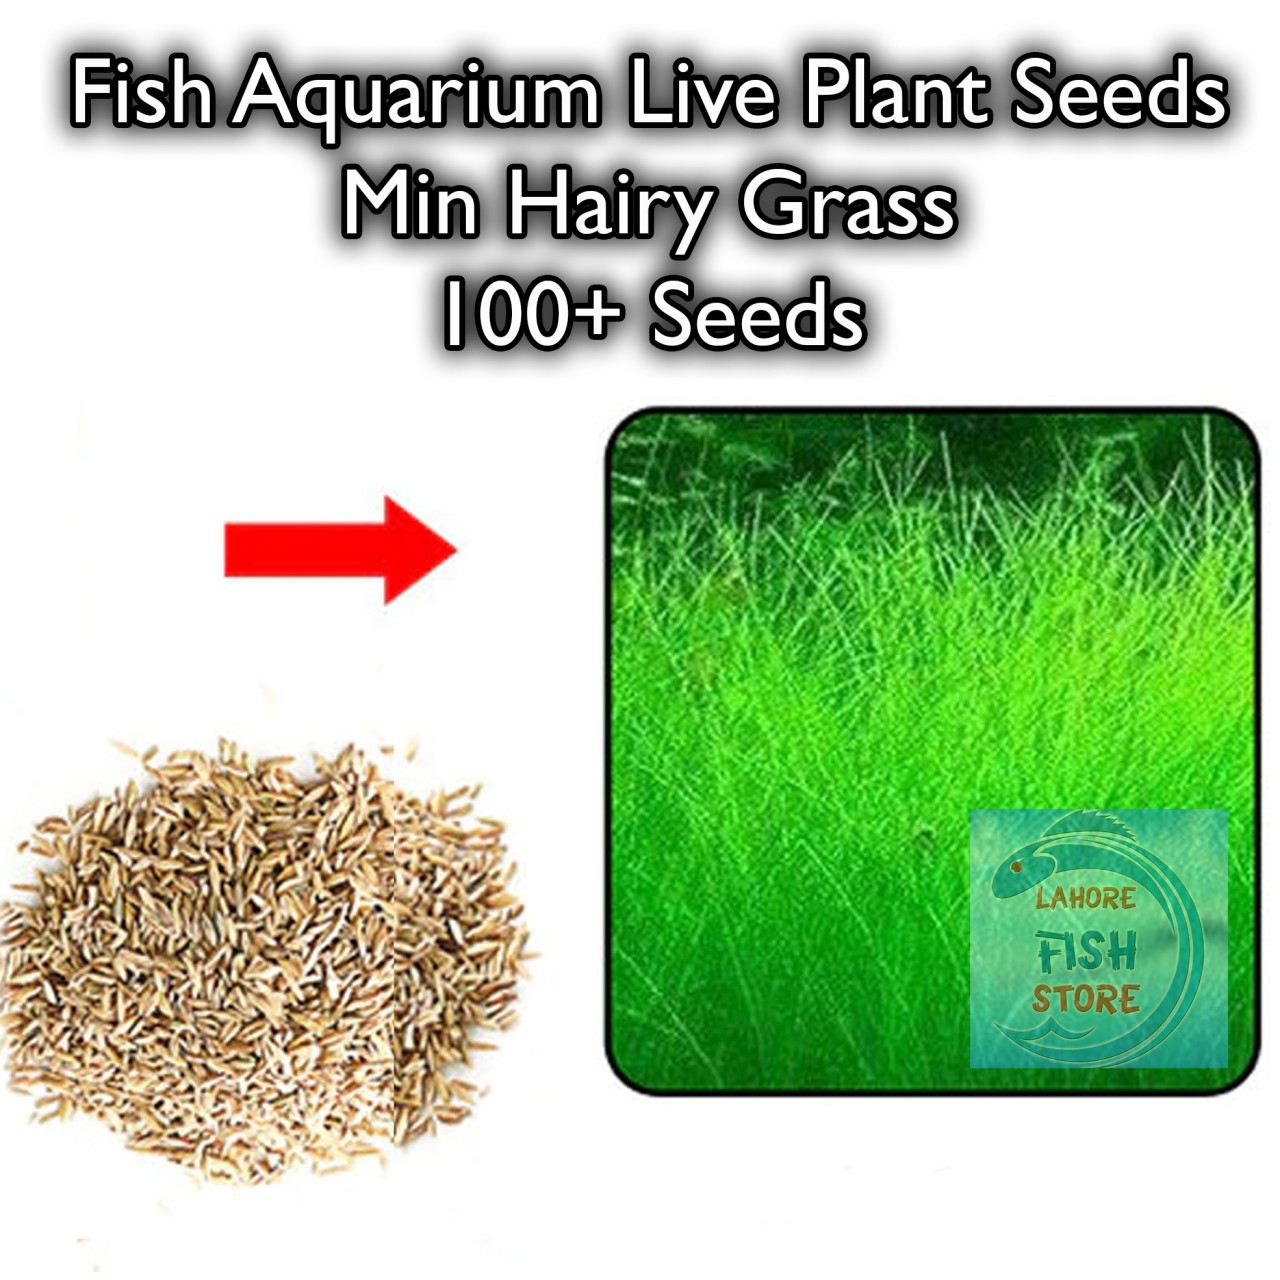 Fish Aquarium Live Plant Seeds - Mini Hairy Grass - 100+ Seeds